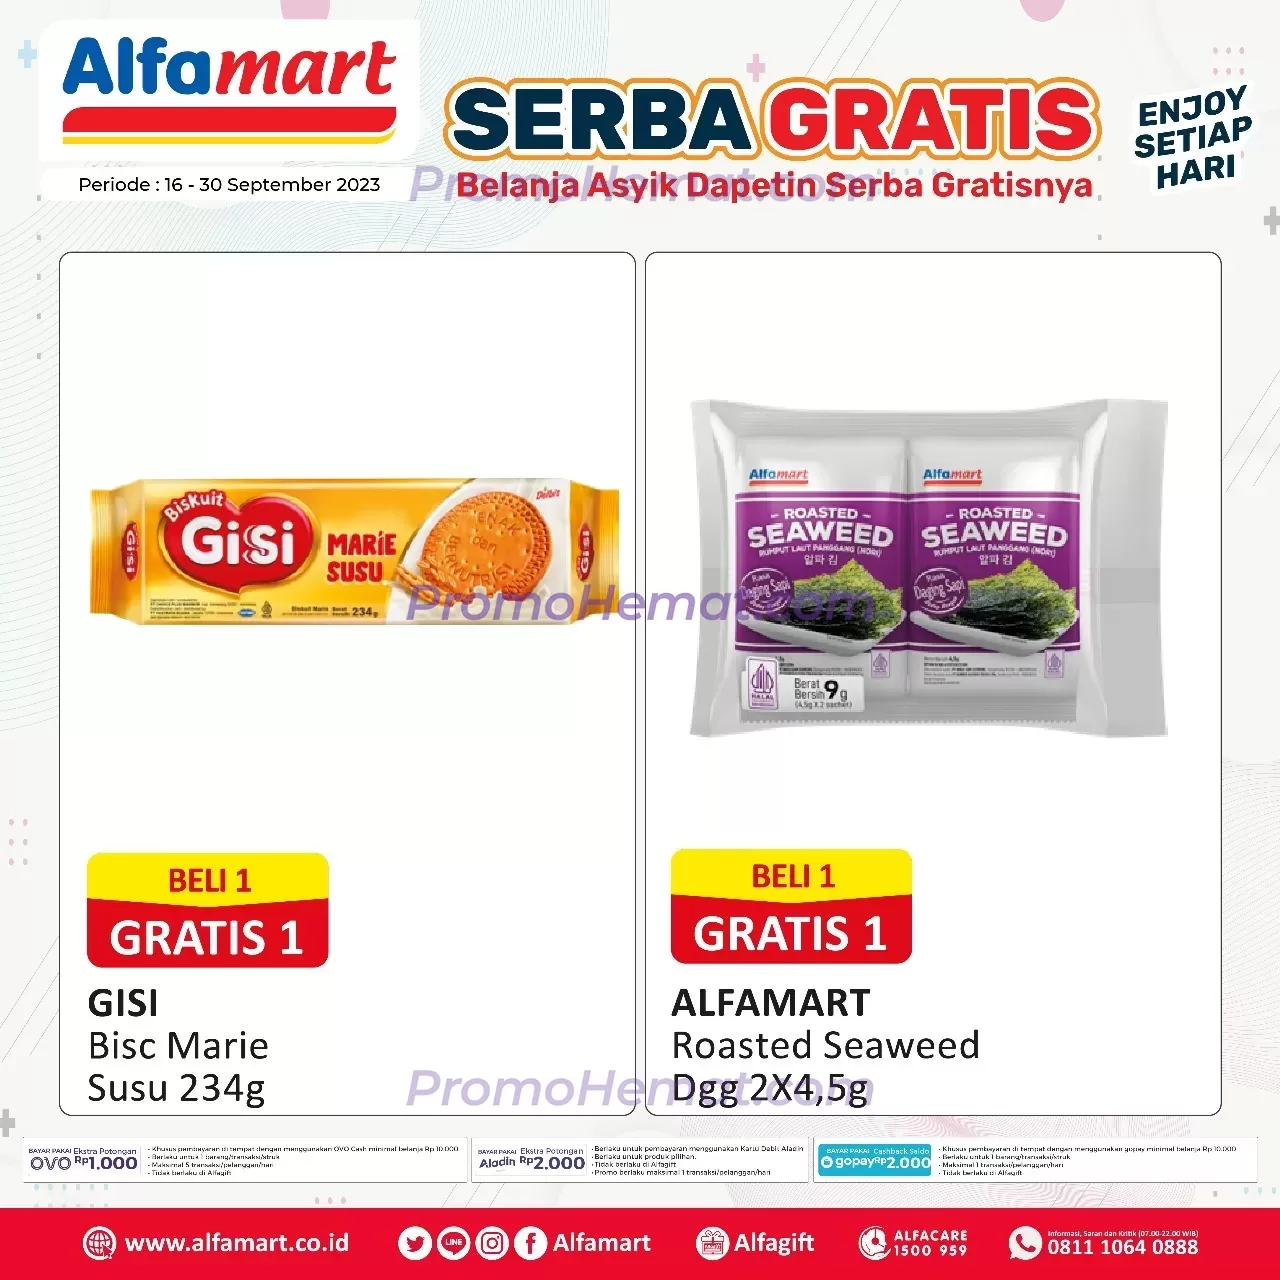 Promo Serba Gratis Alfamart Periode 16 - 30 September 2023 image_5